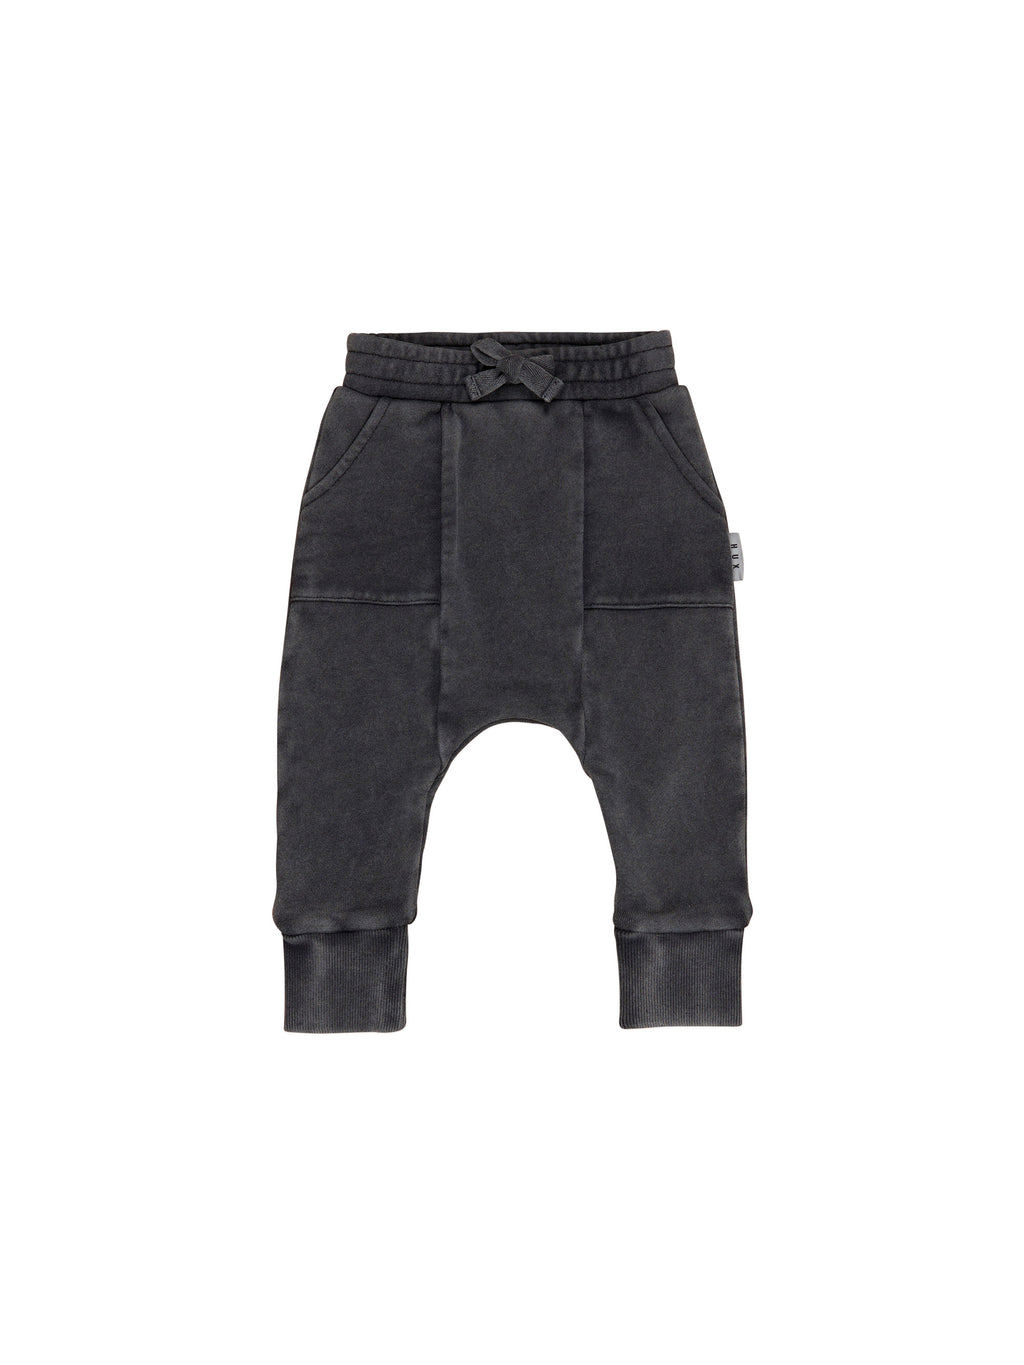 Huxbaby Vintage Black Drop Crotch Pant  - Washed Black